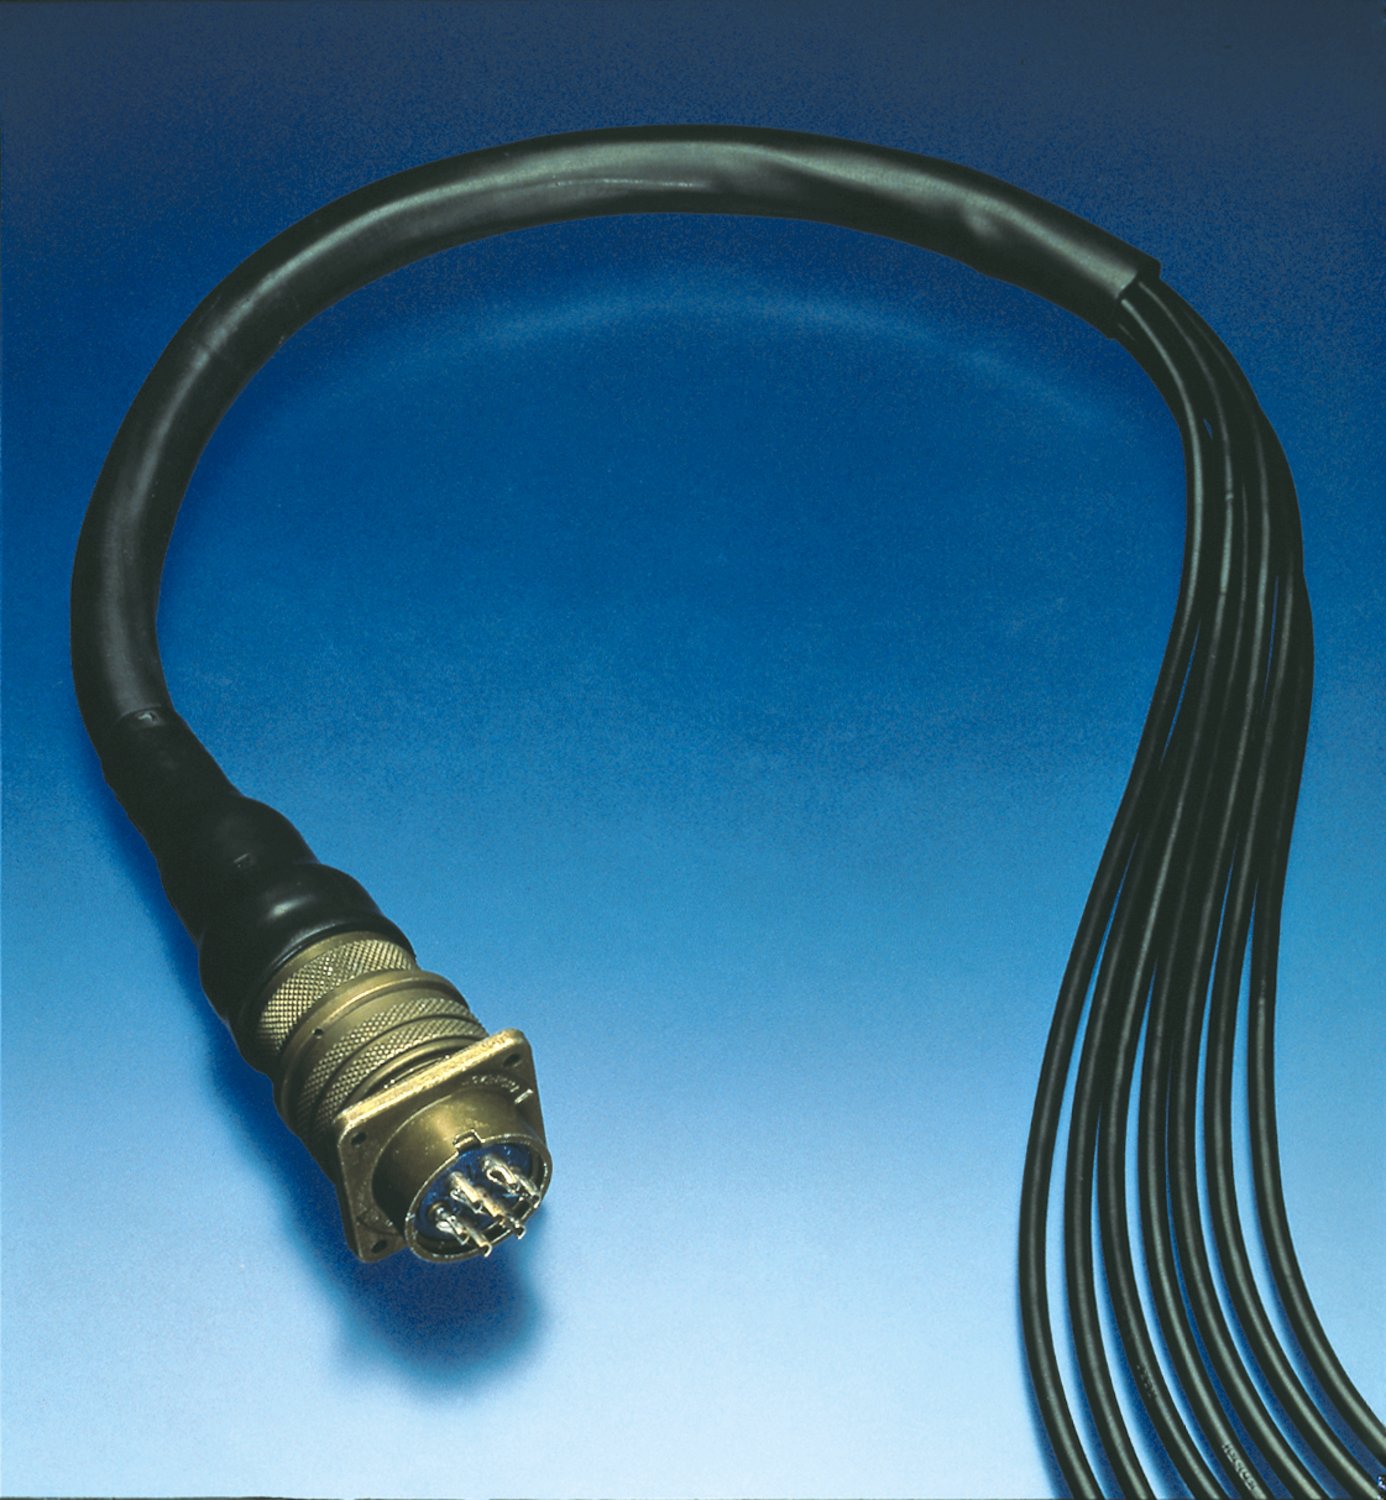 7010320074 - 3M Modified Fluoroelastomer Tubing VTN-200, Black, 100 ft Length per
spool, 1 spool per carton, 1 Roll/Case